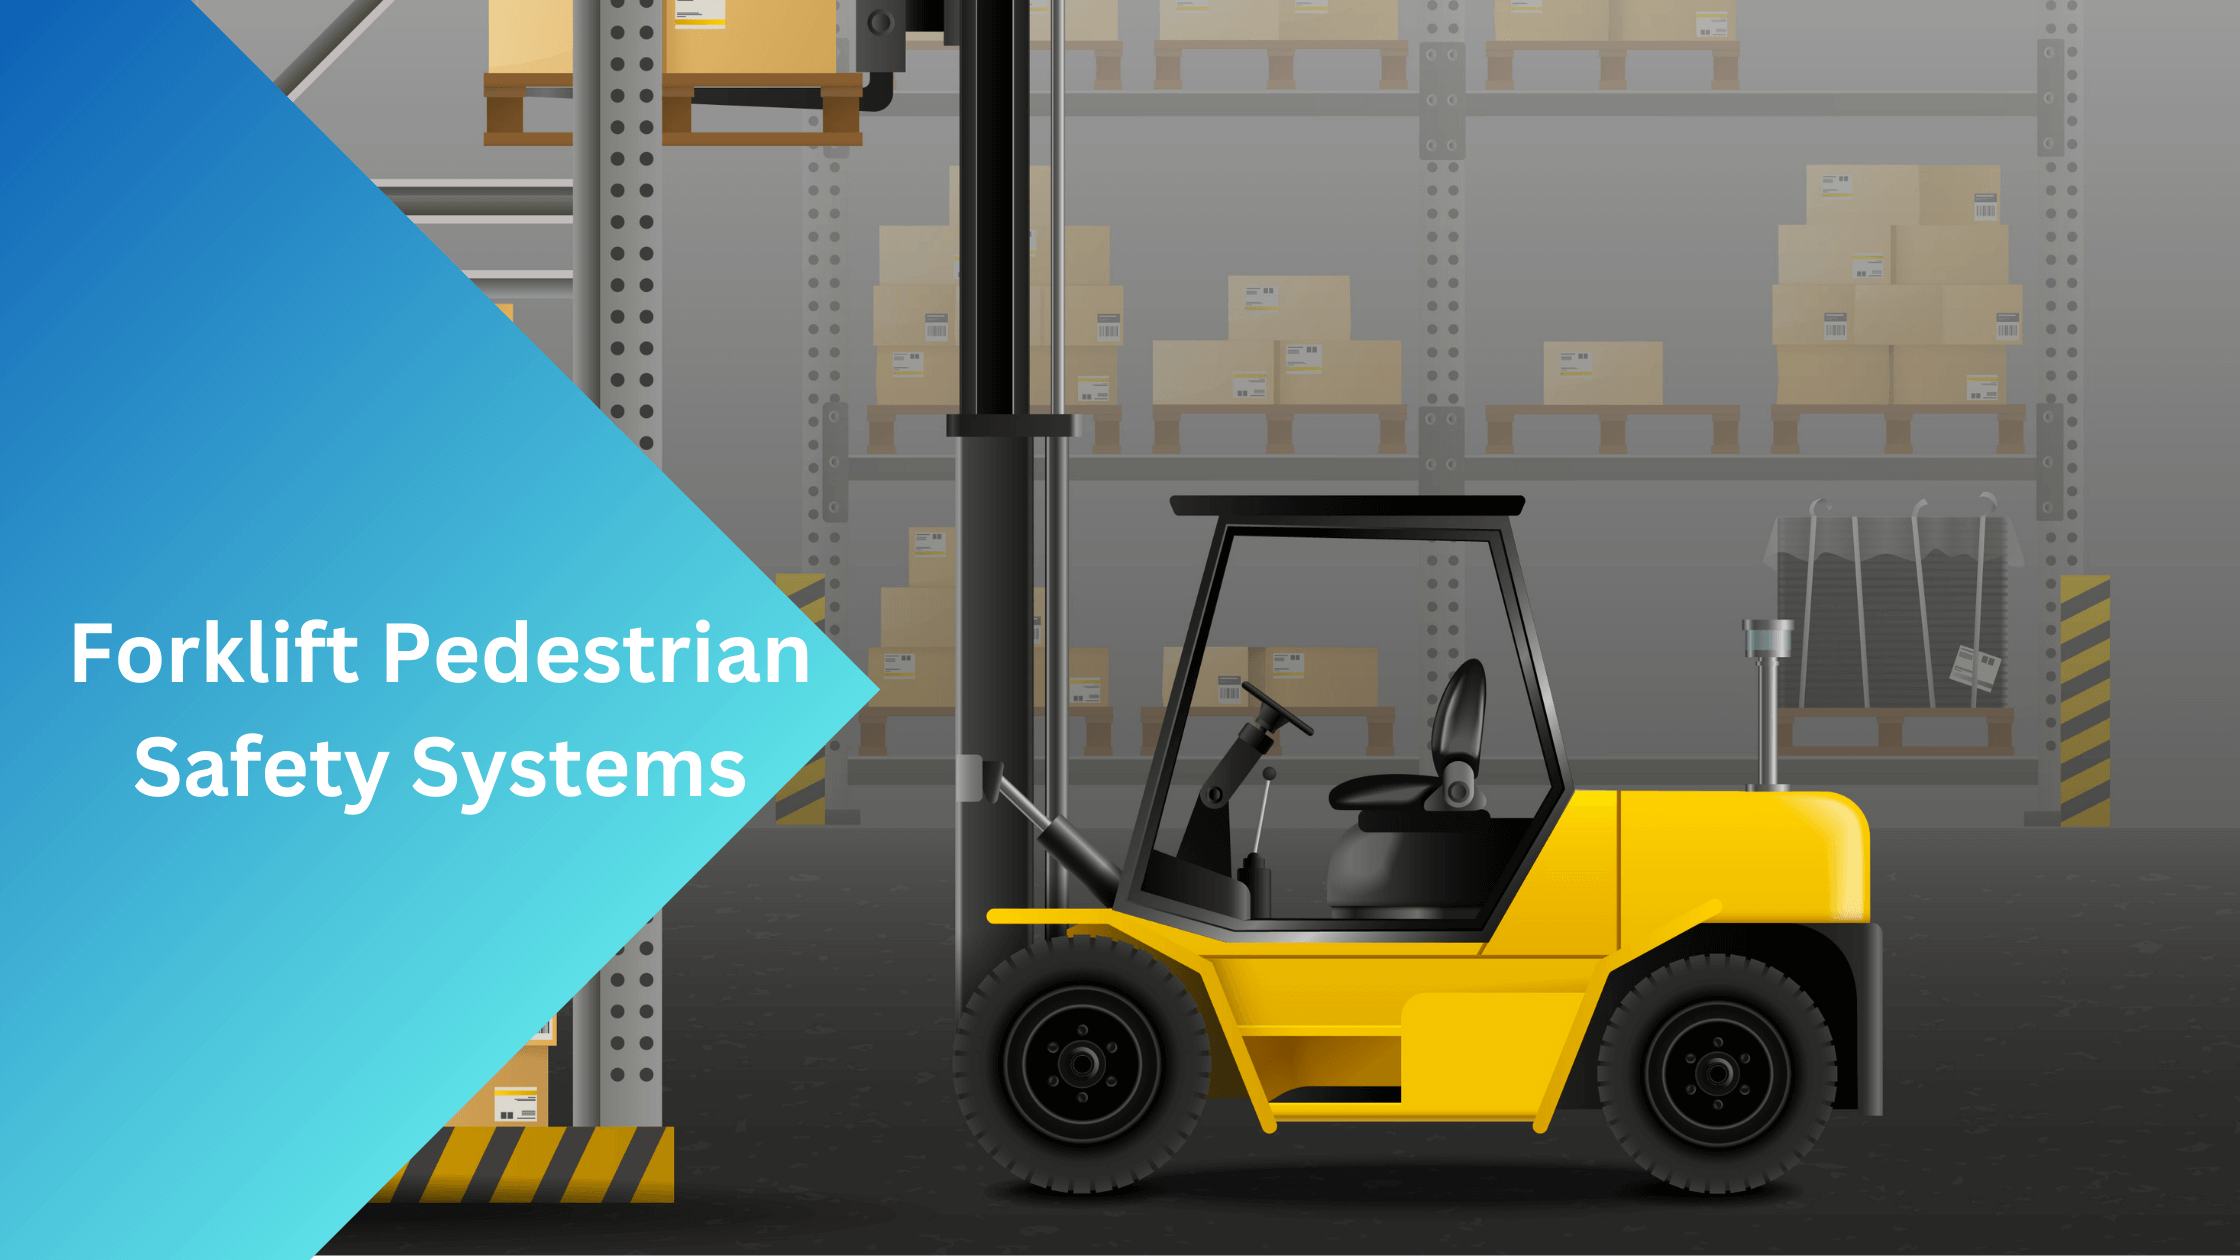 Forklift Pedestrian Safety Systems - SIERA.AI